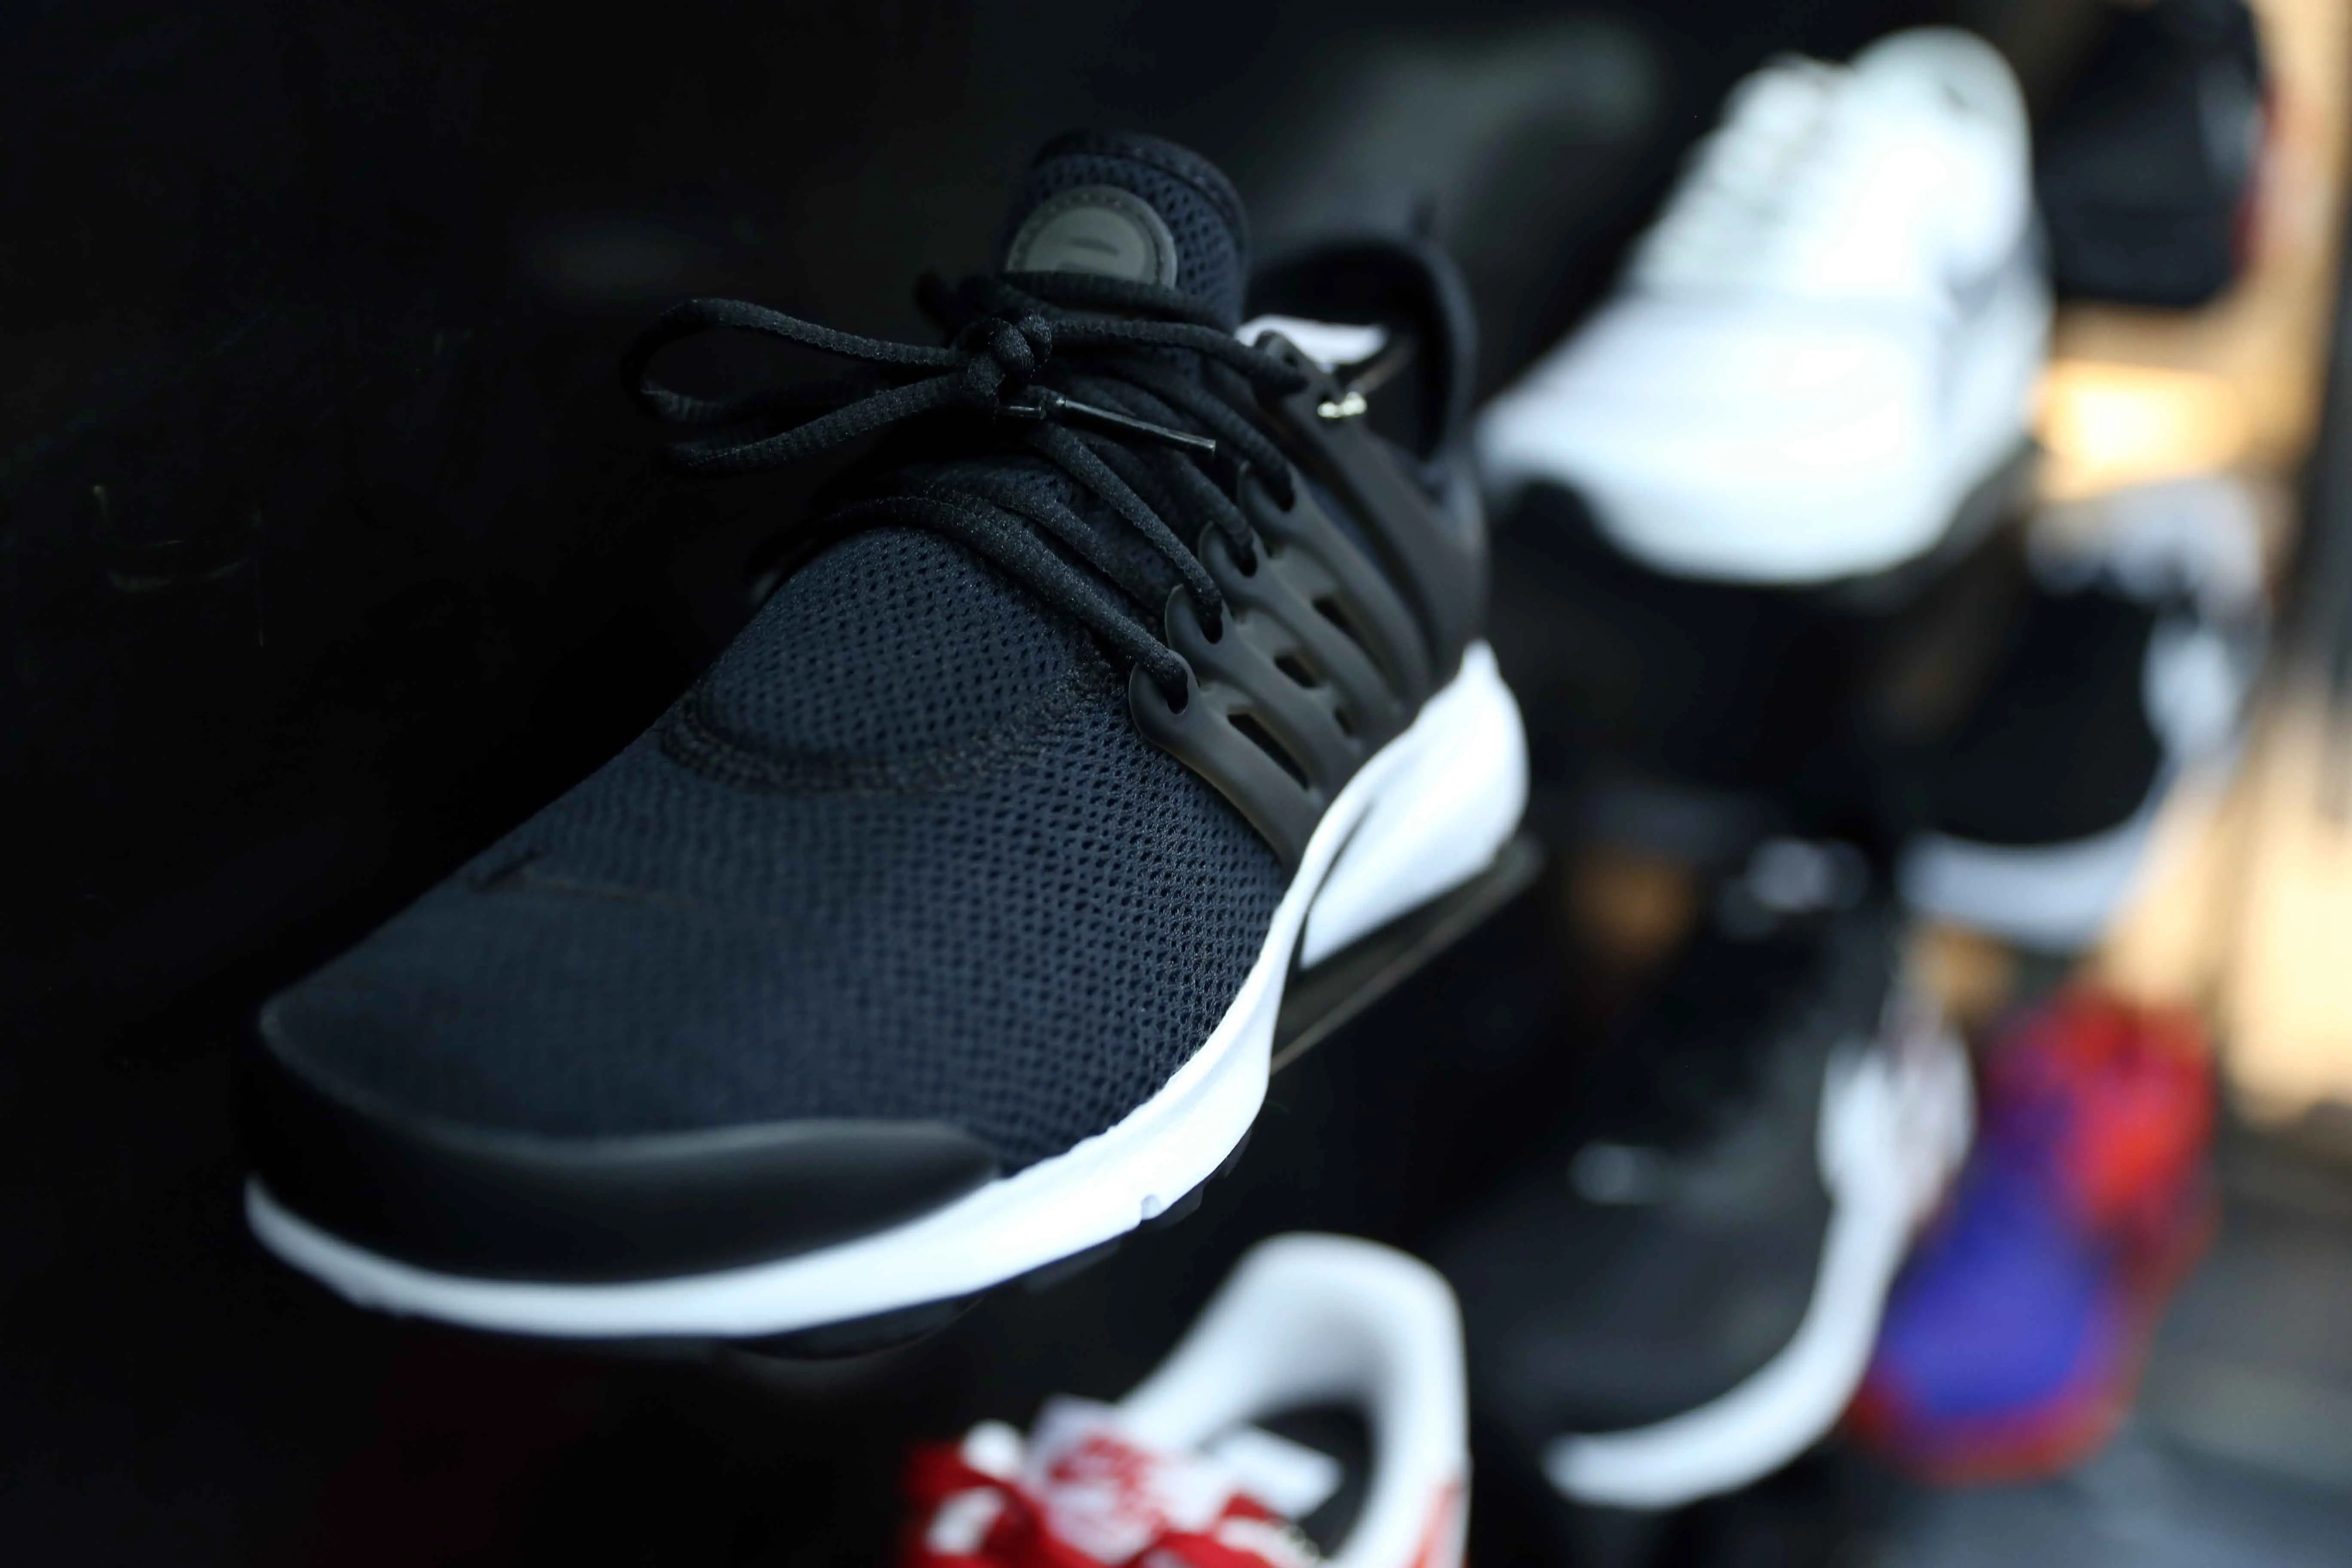 Ini dia 10 jenis sneakers yang nyaman untuk dipakai jalan. (Yunan/Bintang.com)